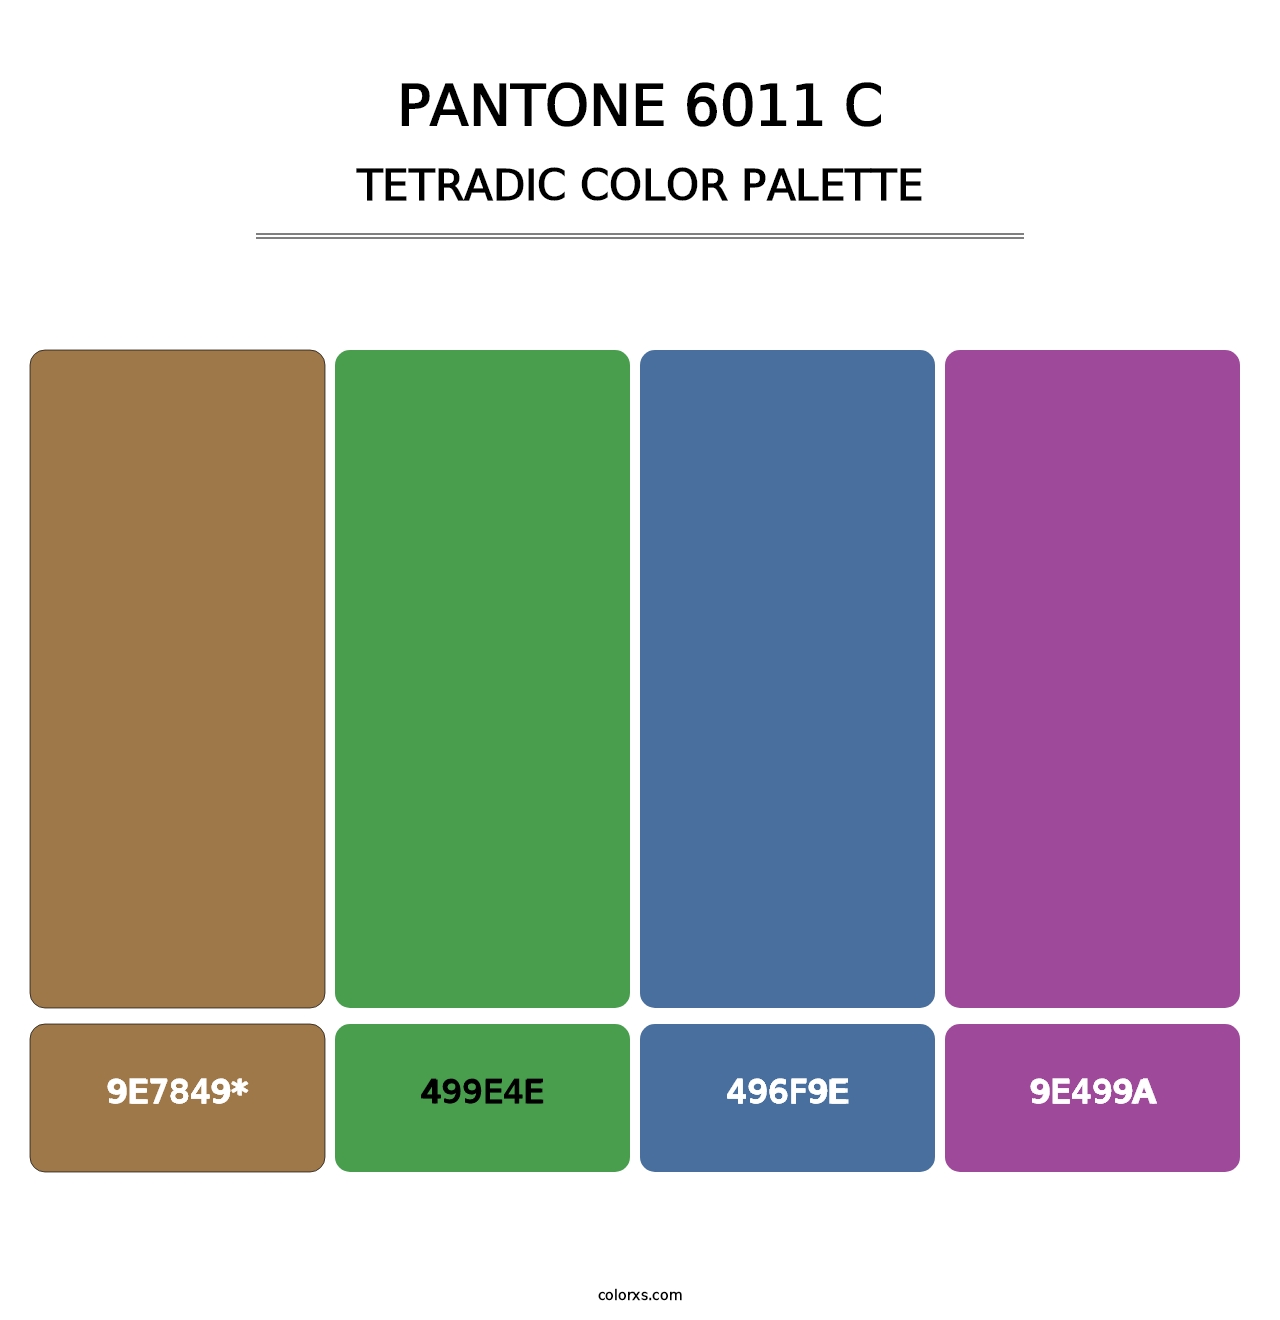 PANTONE 6011 C - Tetradic Color Palette